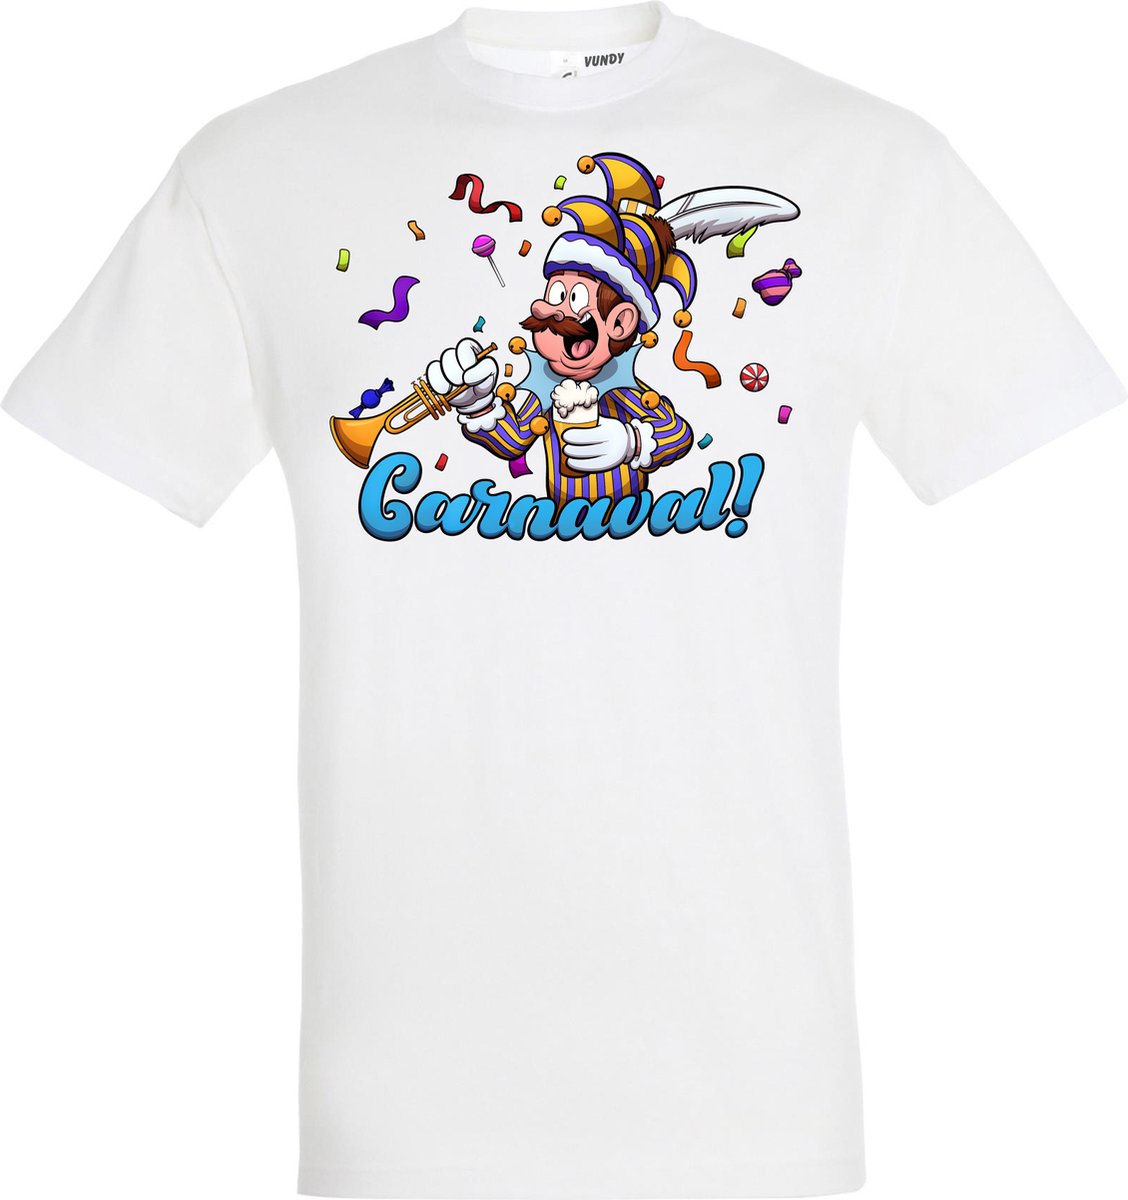 T-shirt kinderen Carnavalluh | Carnaval | Carnavalskleding Kinderen Baby | Wit | maat 68